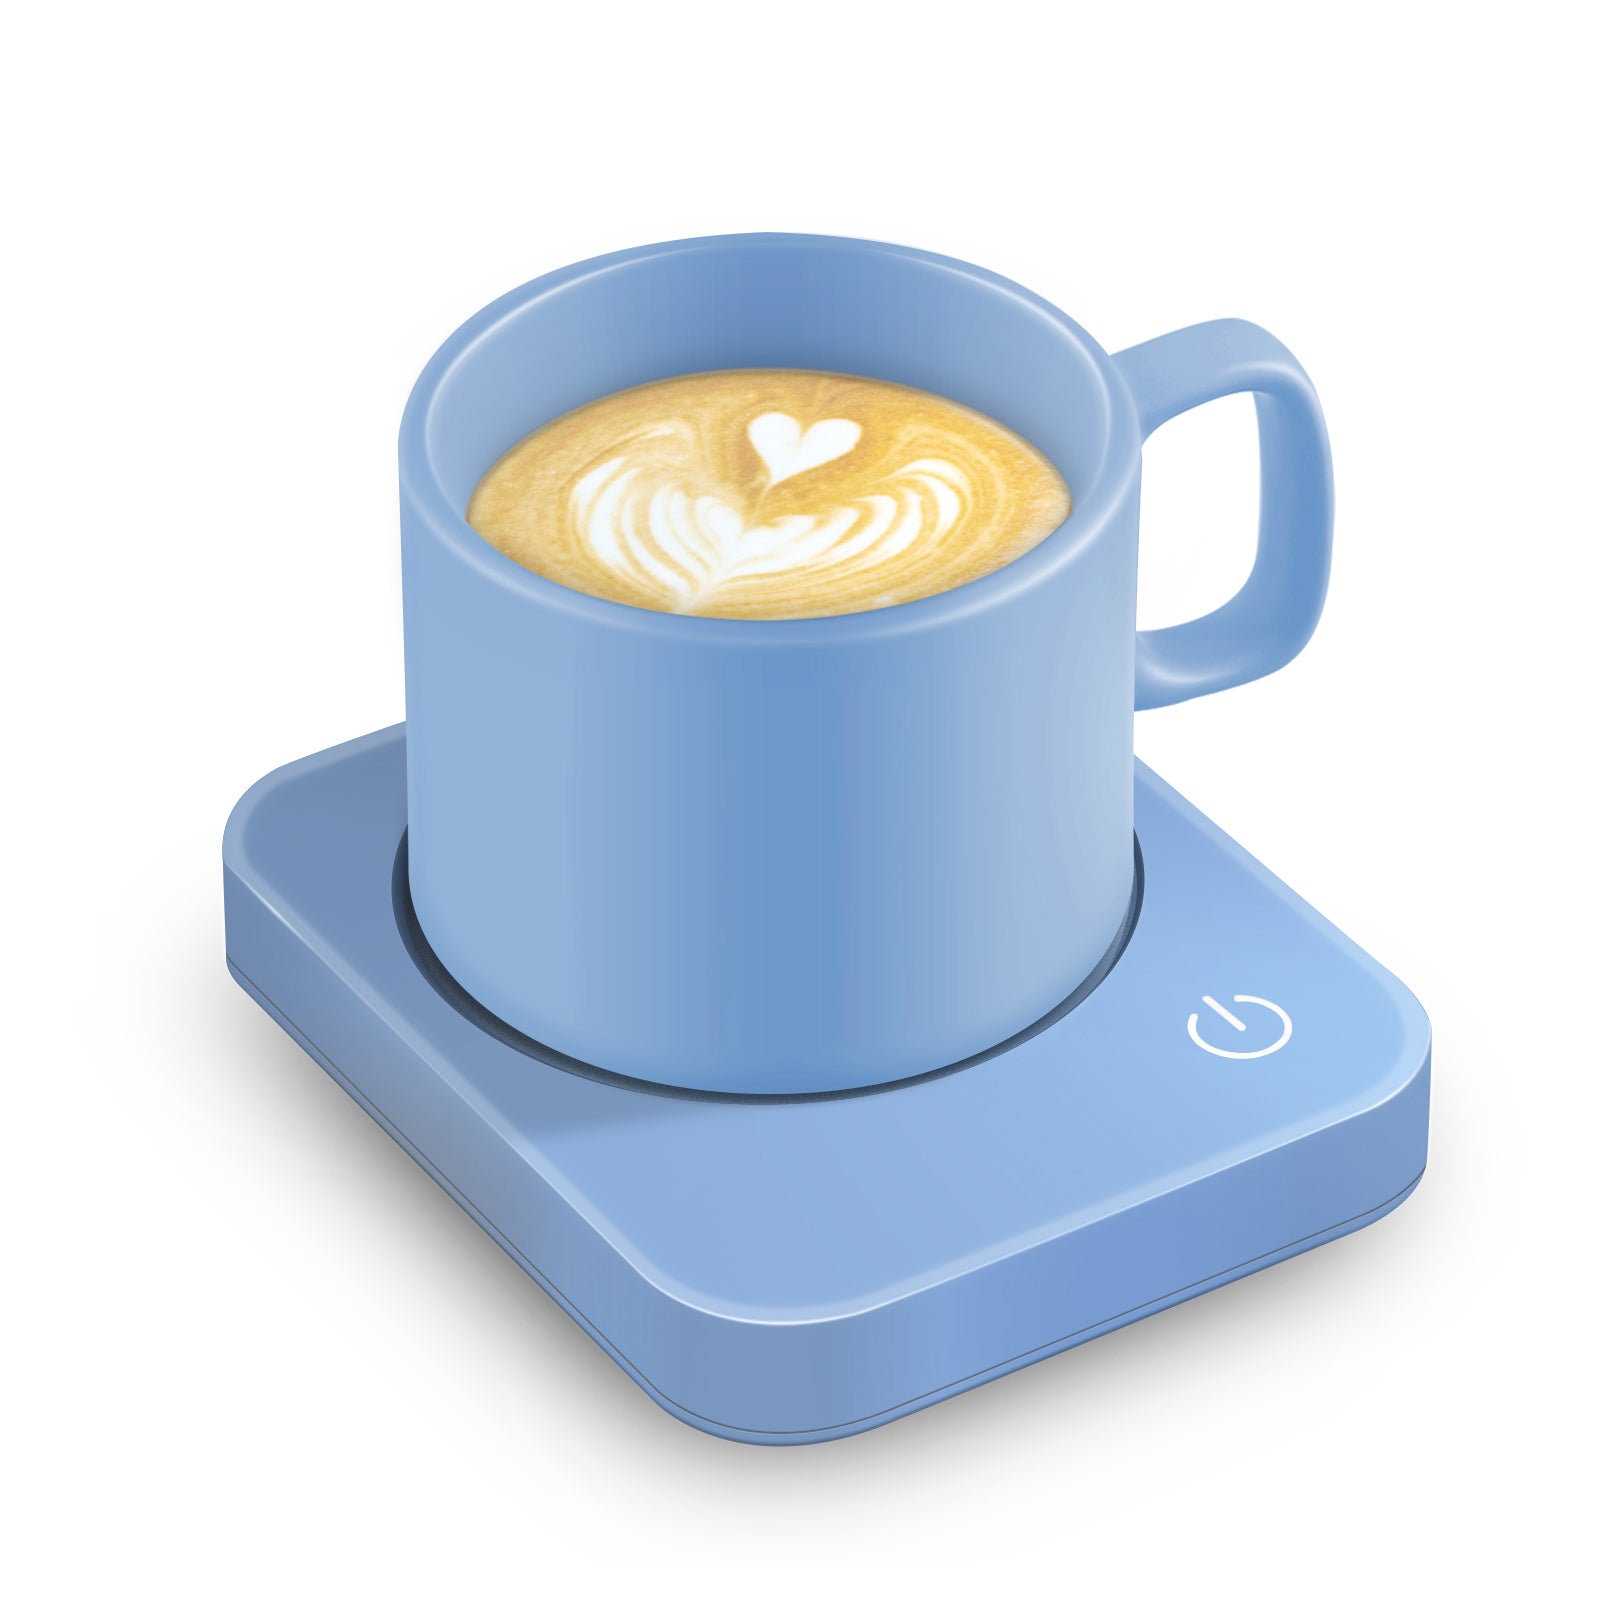 USA Top Rated Coffee Warmer for Desk, Mug Warmer with Auto Shut